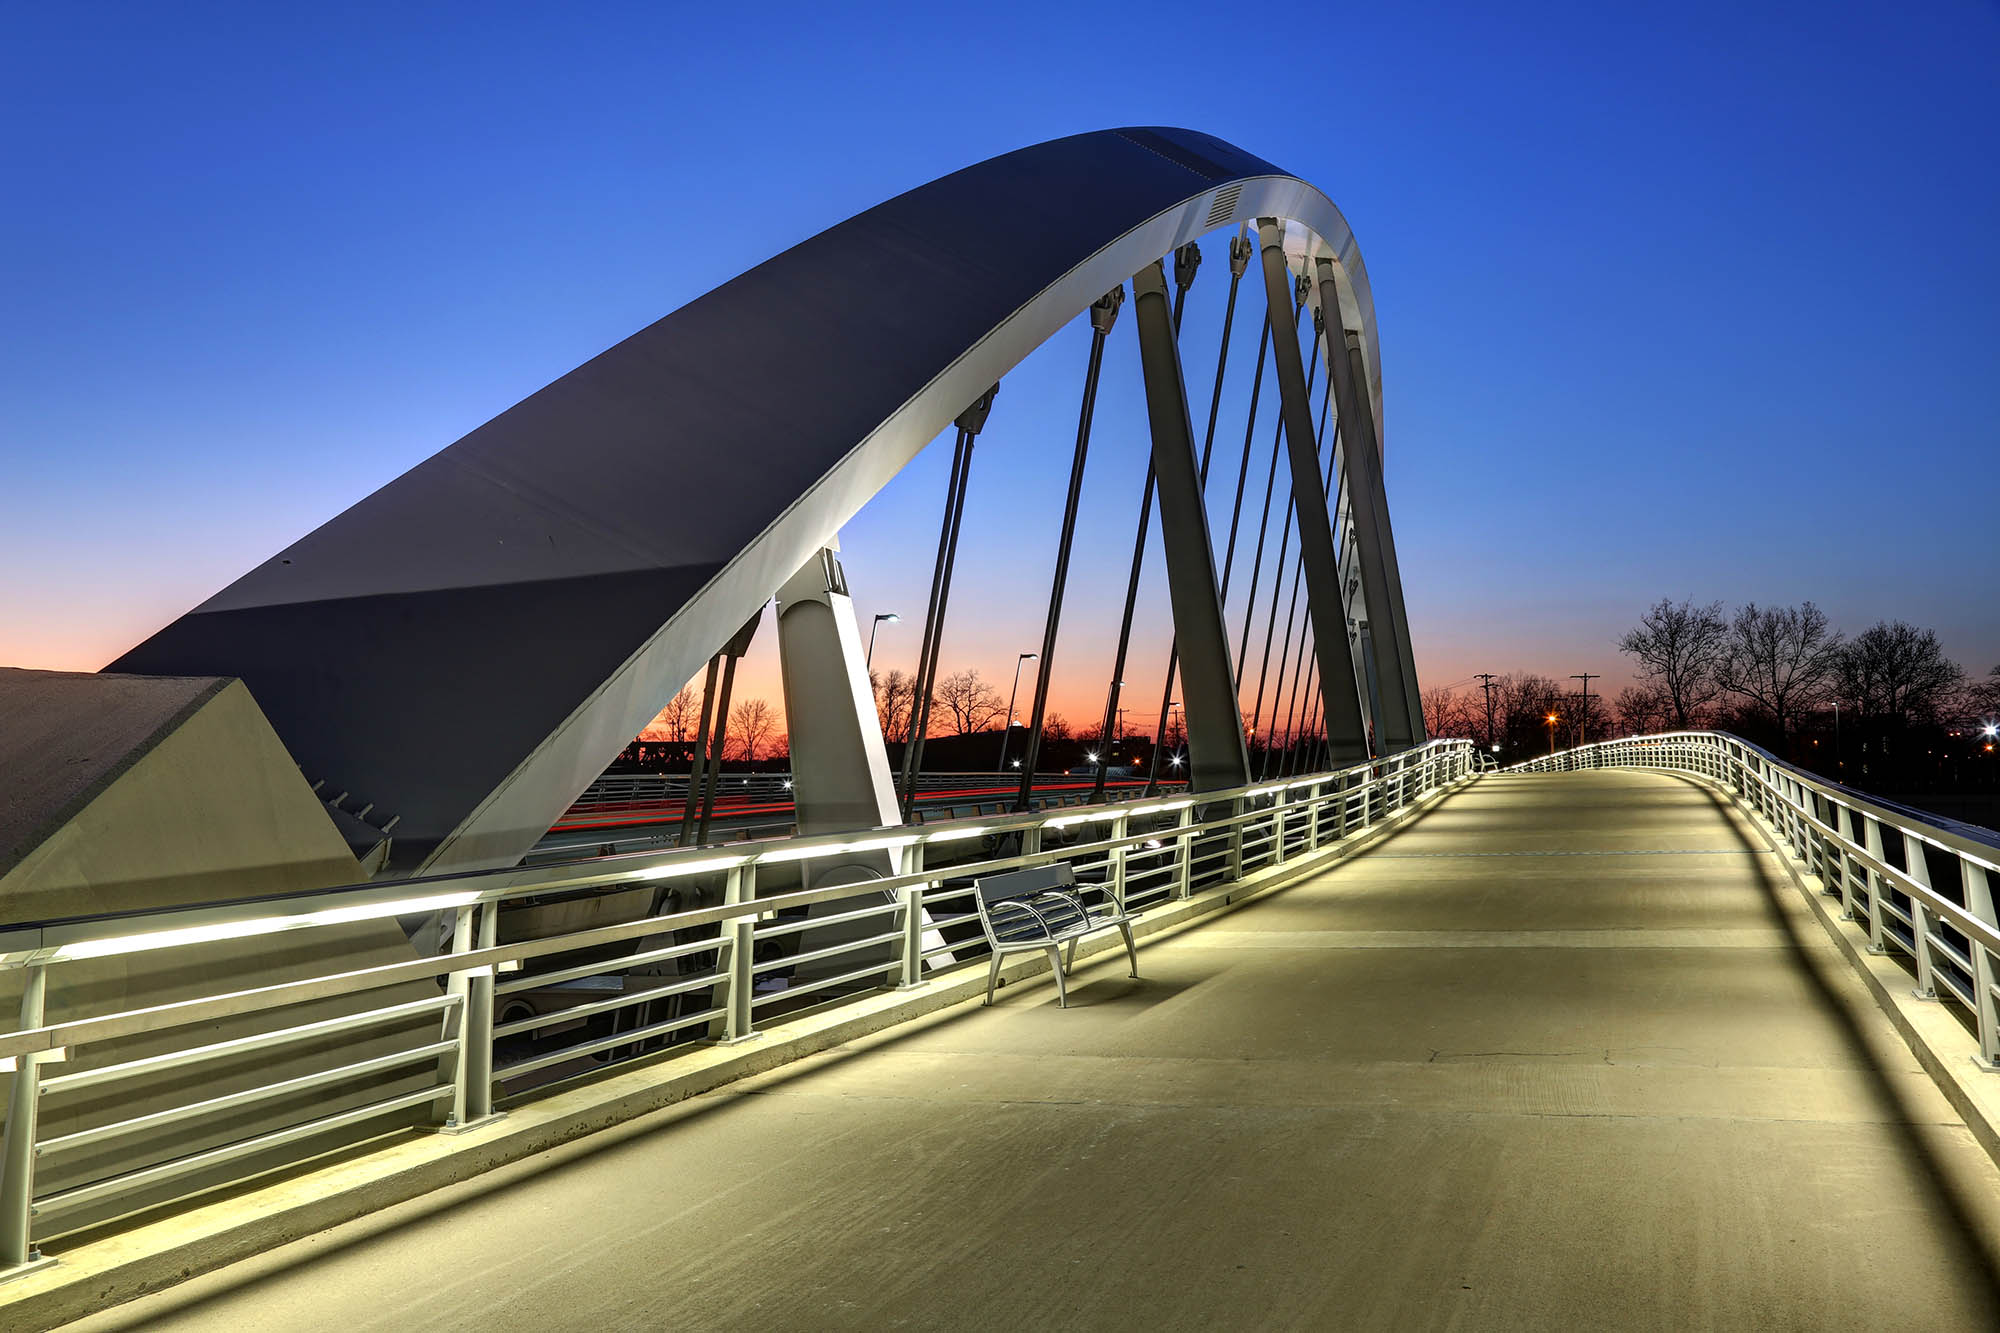 After sunset shot of the Main Street bridge Columbus, Ohio